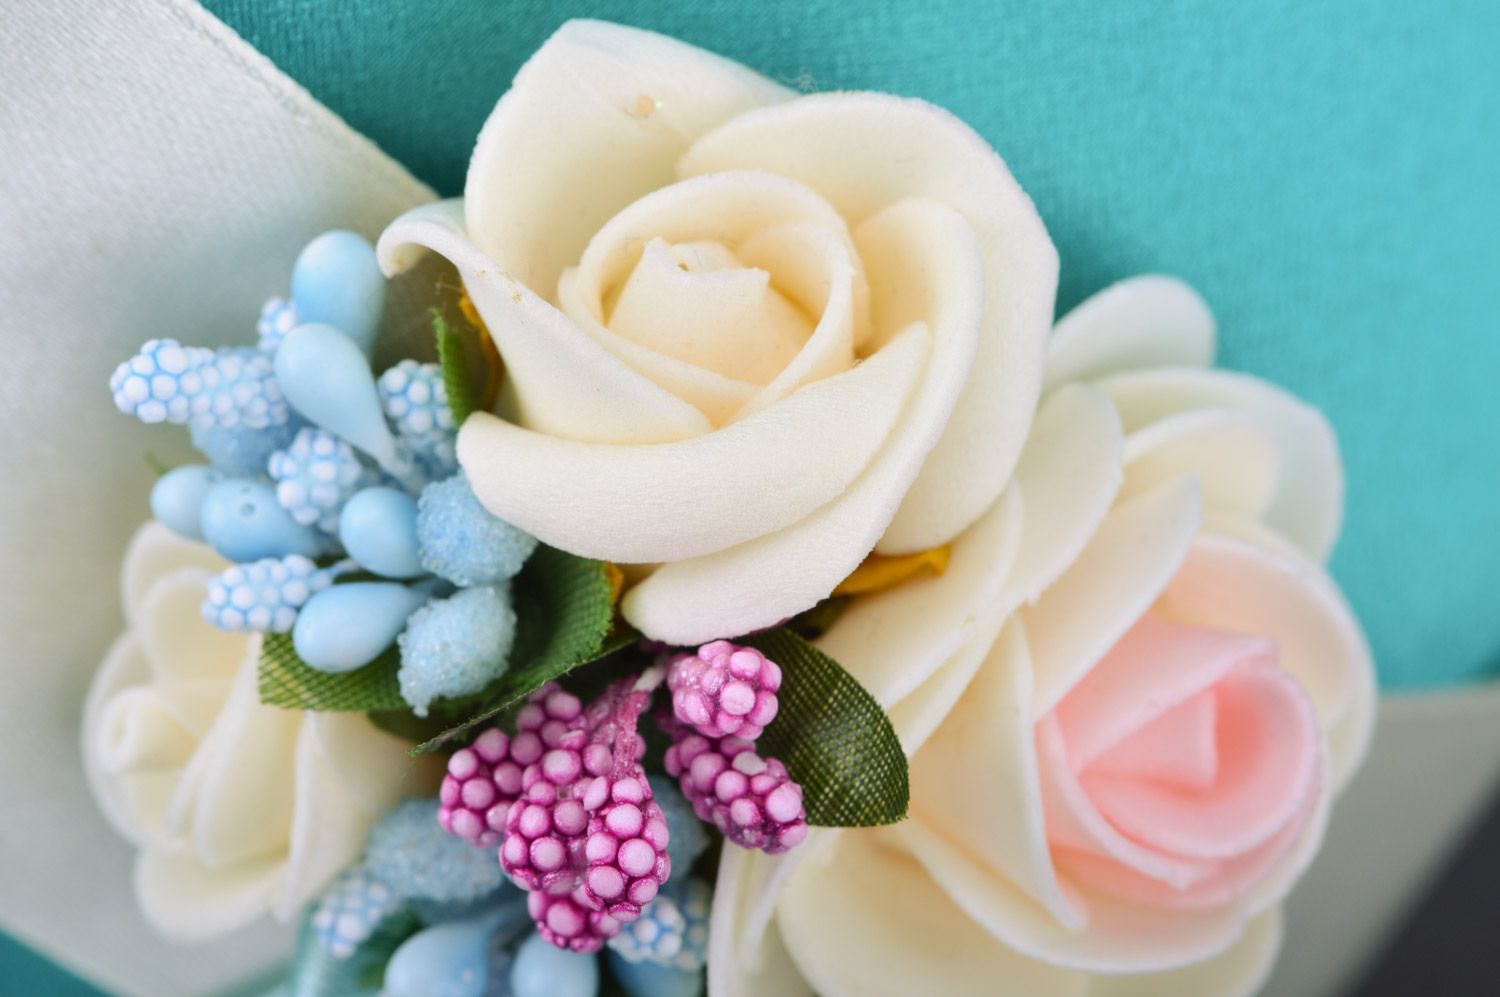 Handmade wedding rings bearer pillow sewn of blue satin with tender flowers  photo 4